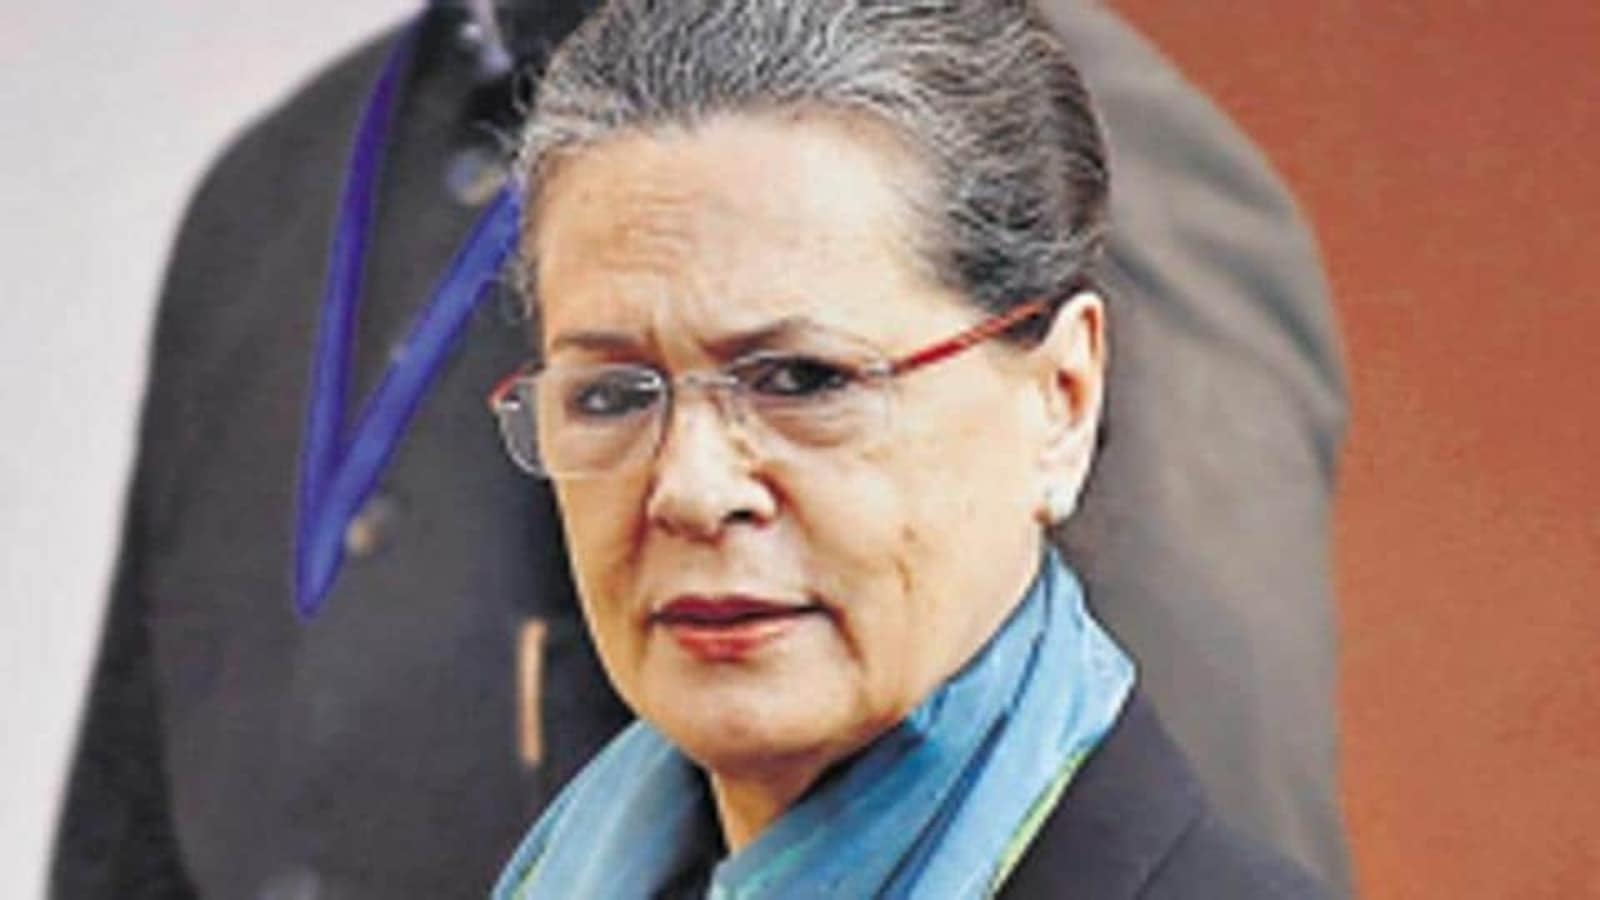 Sonia Gandhi Sex - Old video of Sonia Gandhi viral ahead of ED quiz: 'Main Indira ji ki bahu  hoon' | Latest News India - Hindustan Times